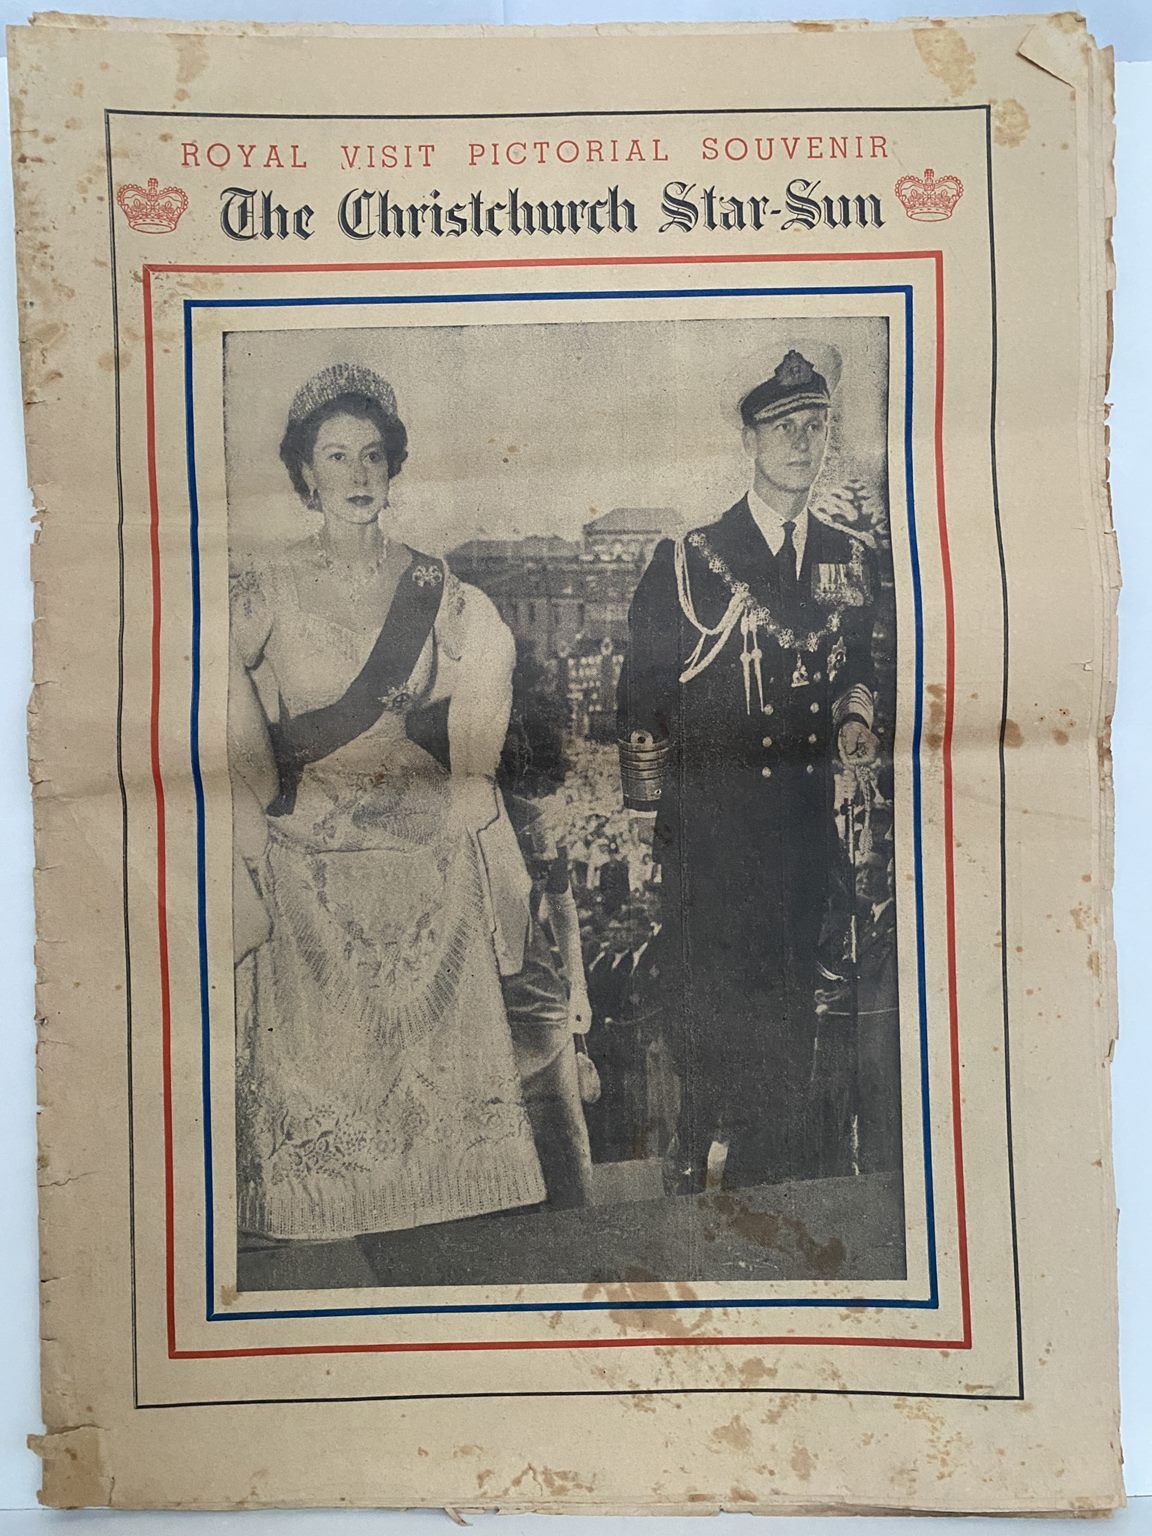 OLD NEWSPAPER: The Christchurch Star-Sun, 27 January 1954 - Royal Visit Souvenir